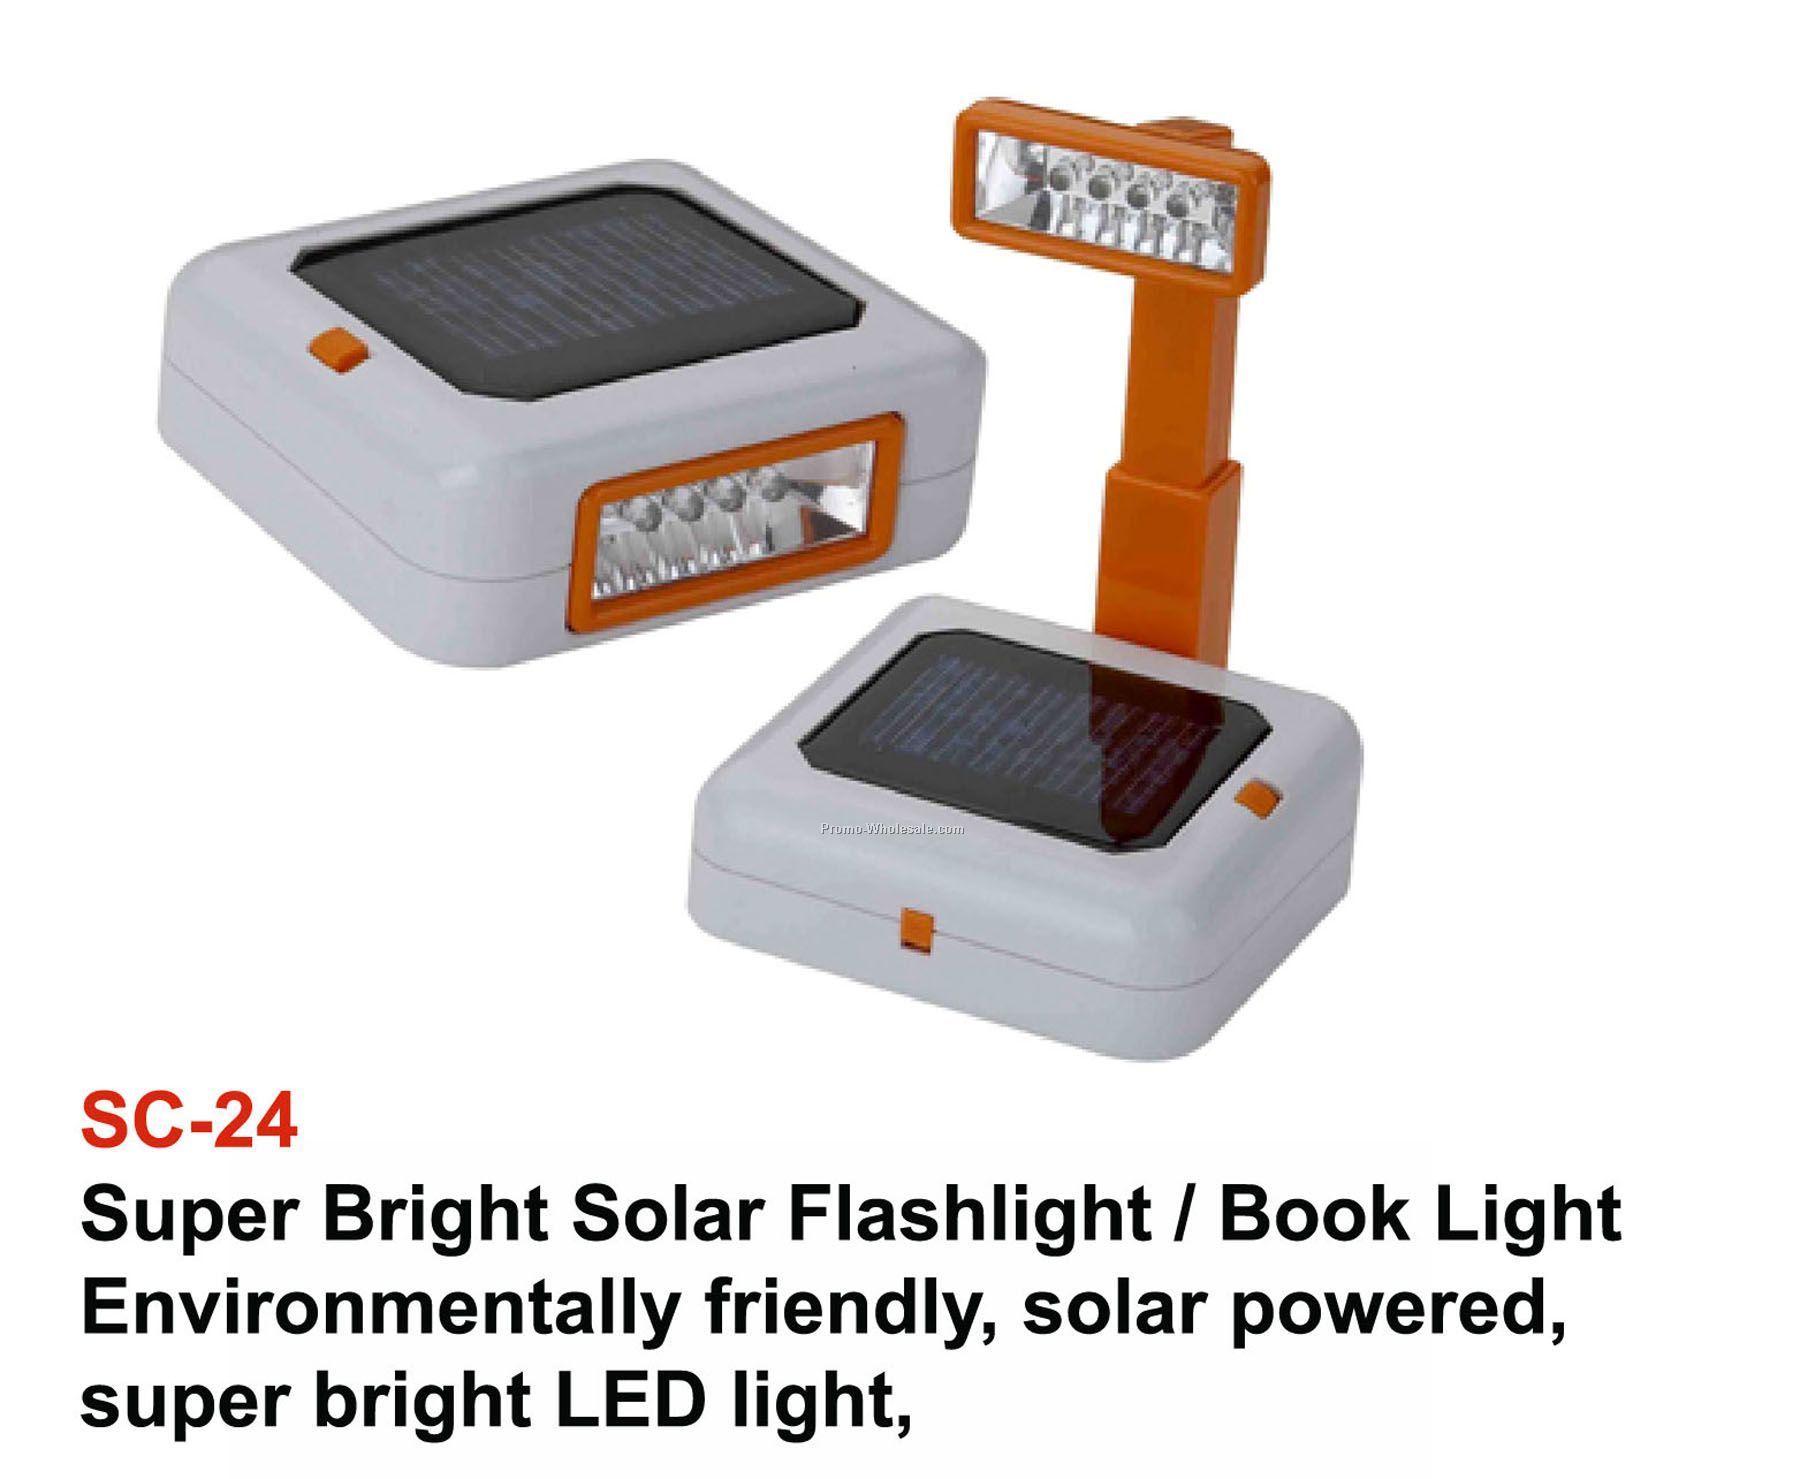 Solar Powered Flashlight / Book Light